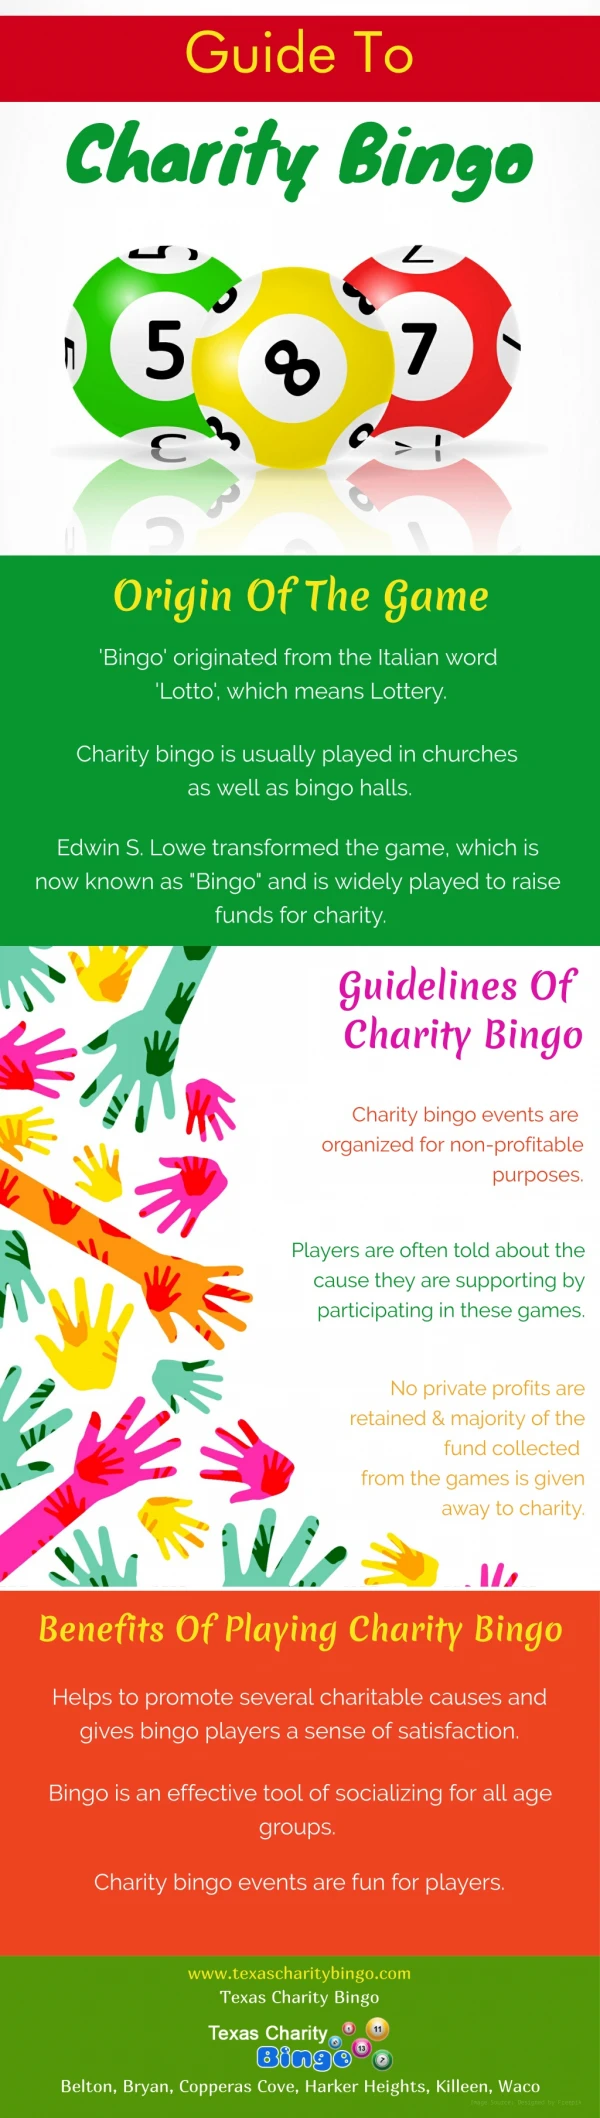 Guide To Charity Bingo